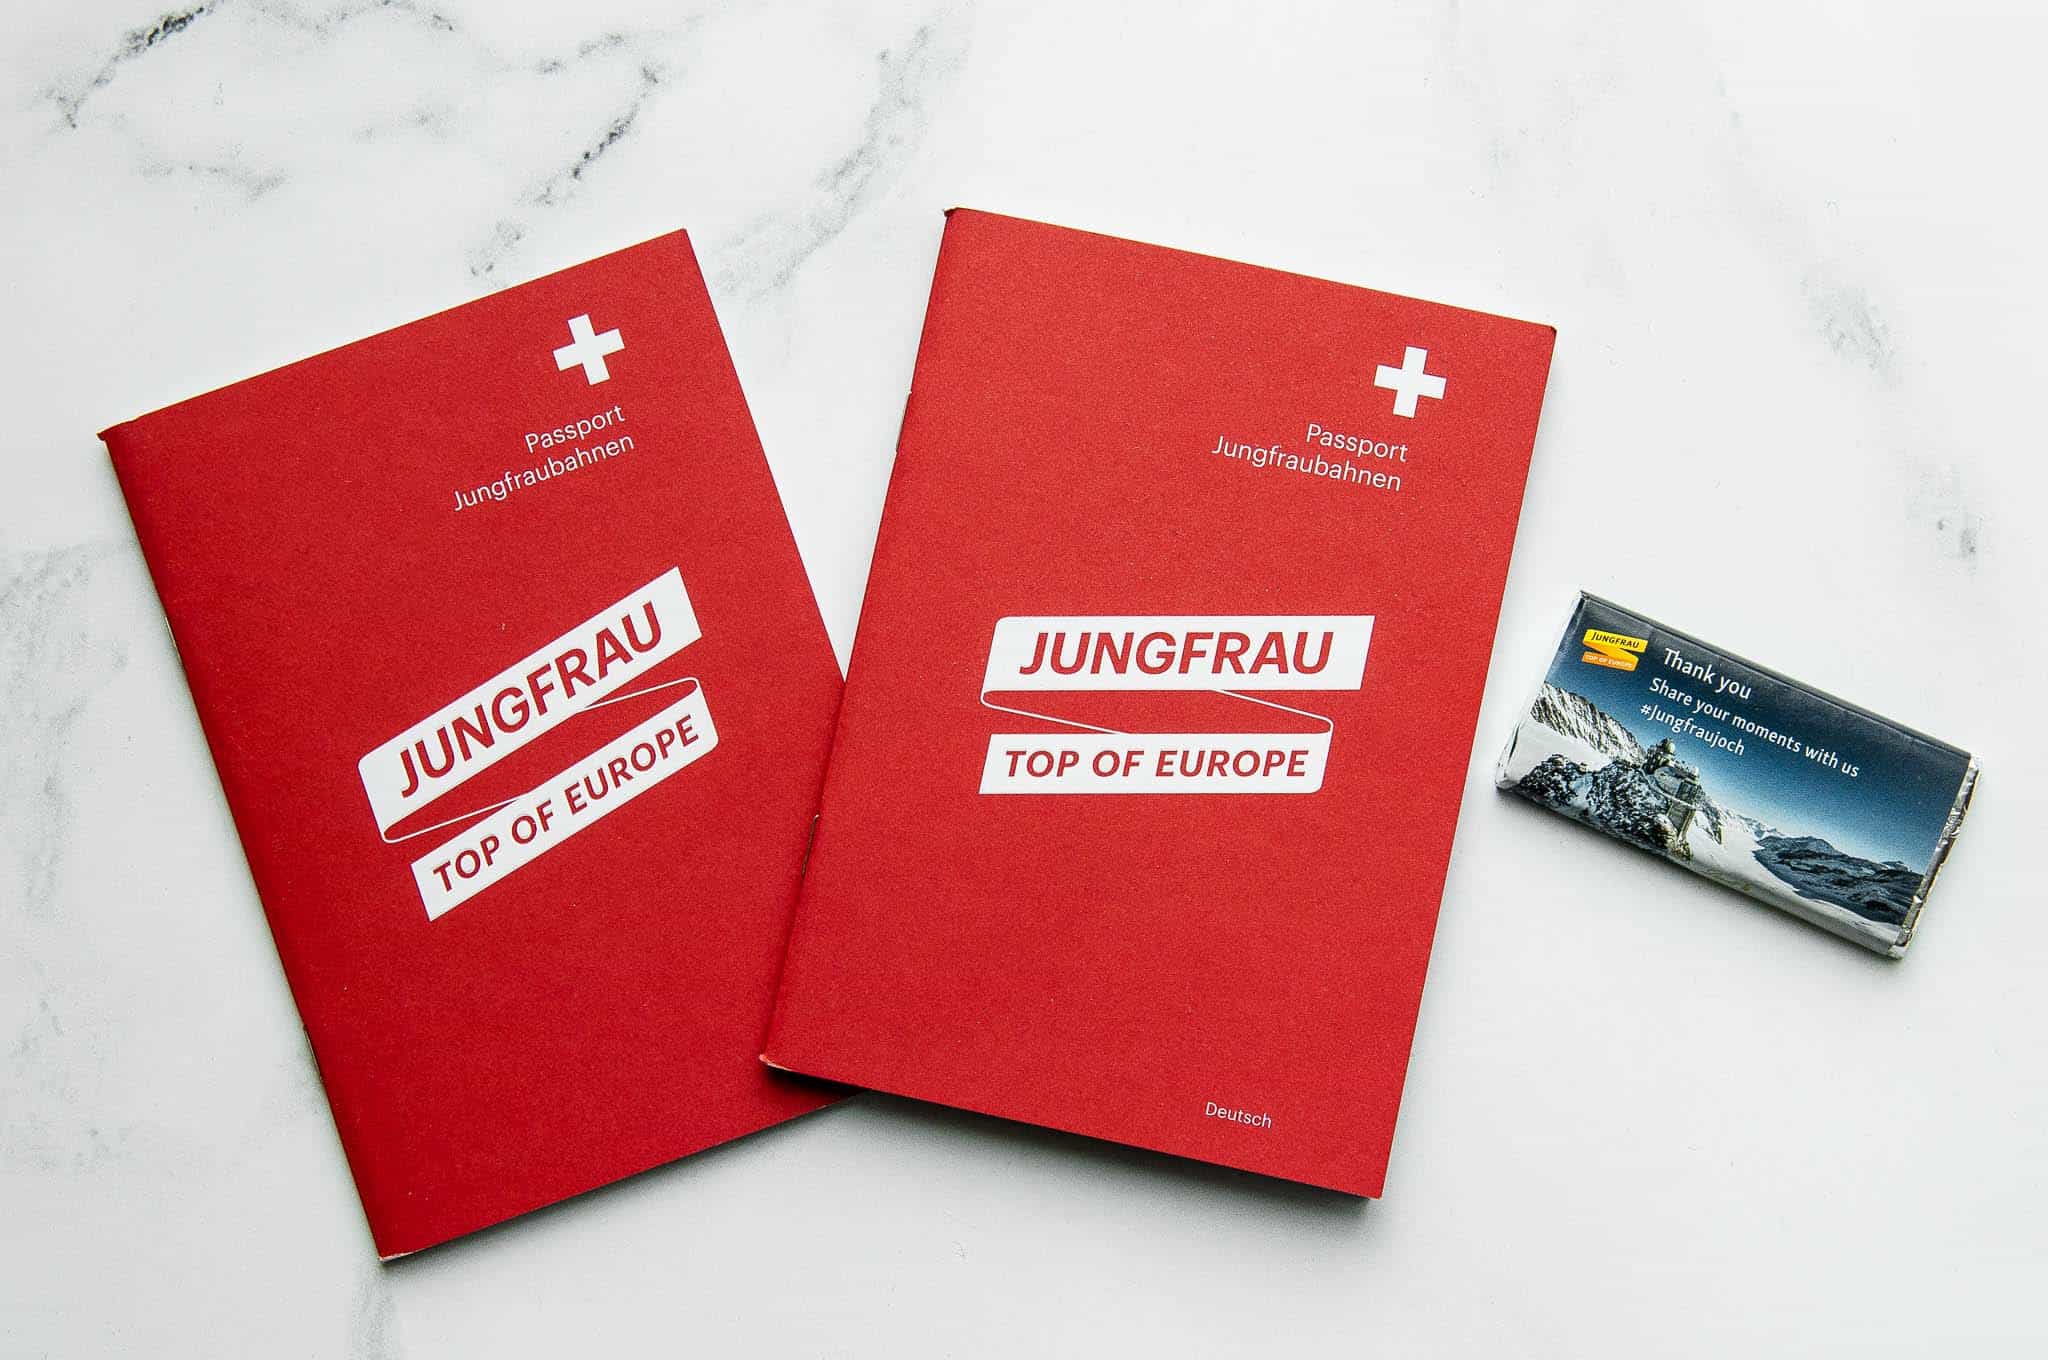 jungfraujoch passports